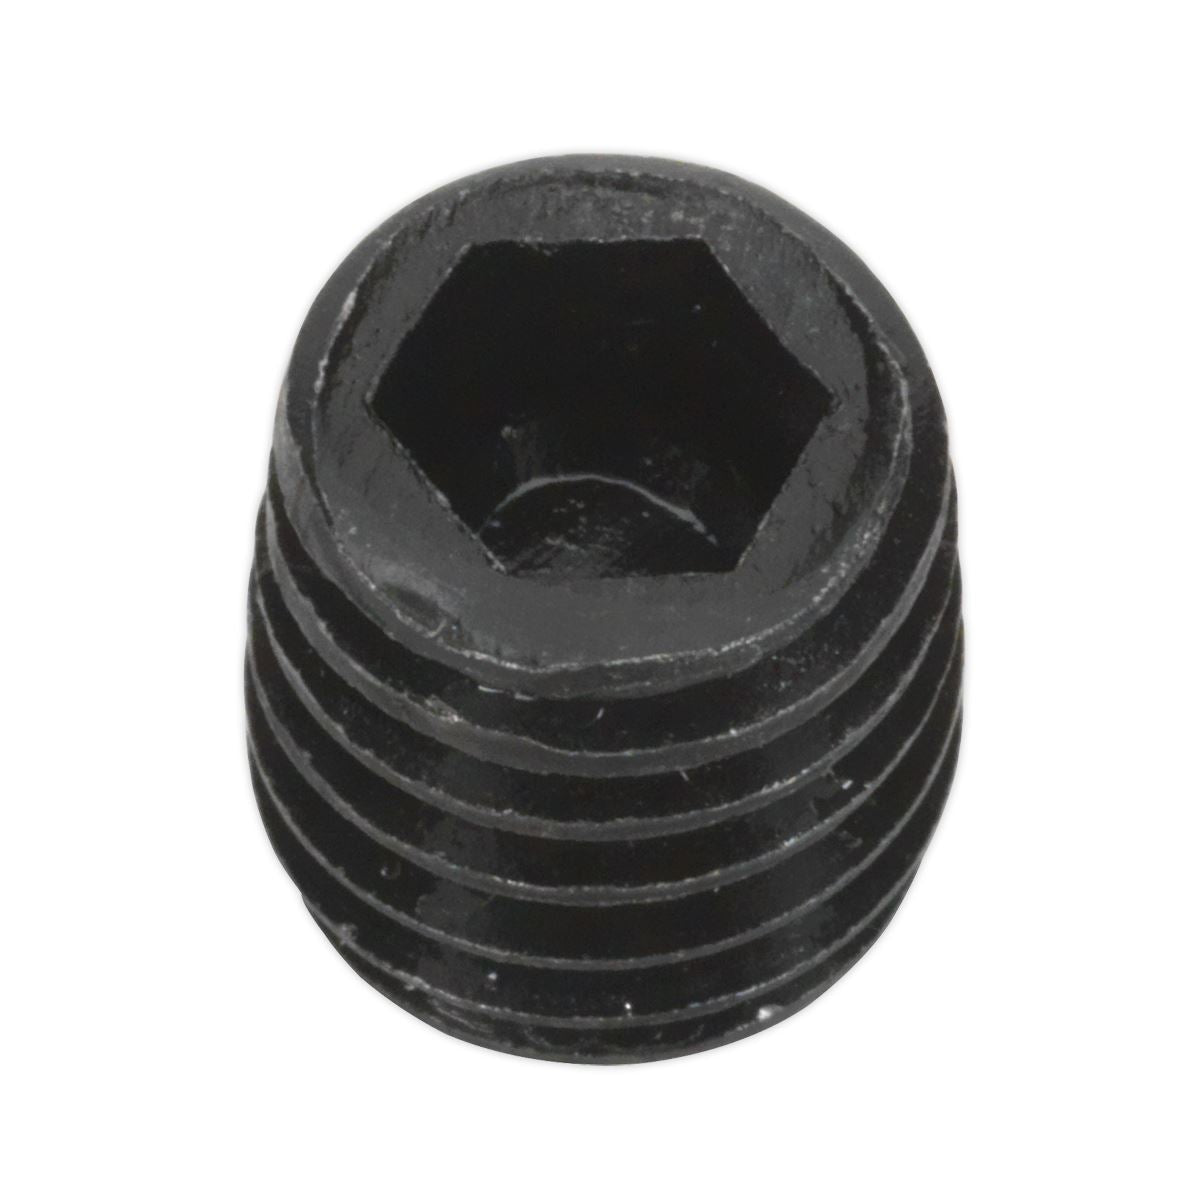 Sealey Grub Screw Assortment 250pc DIN 916 M4-M10 Metric